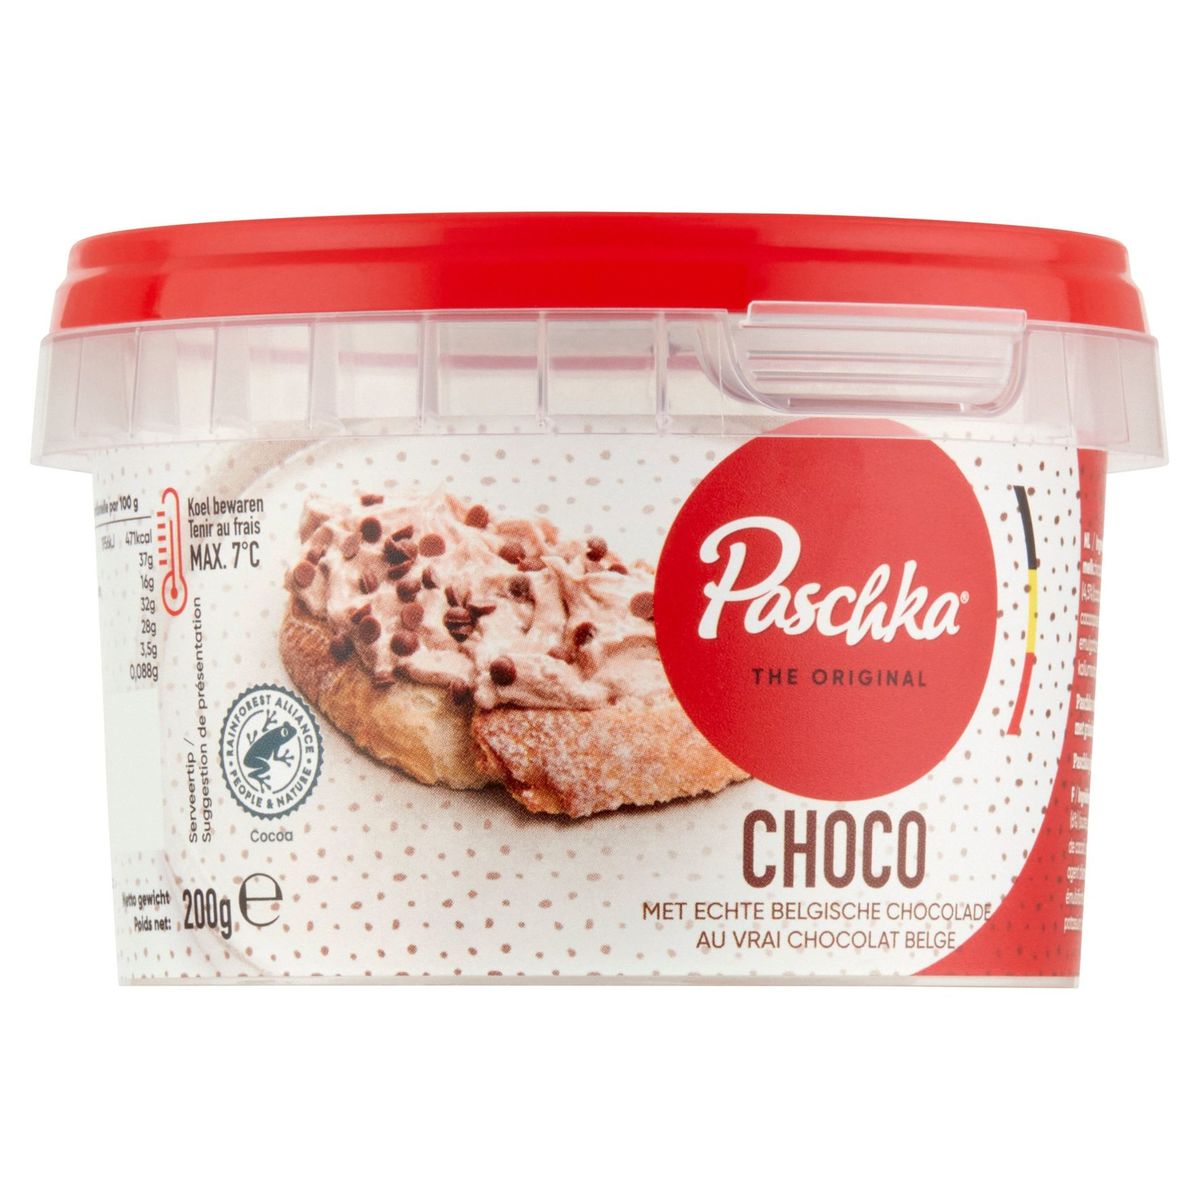 Paschka The Original Choco au Vrai Chocolat Belge 200 g